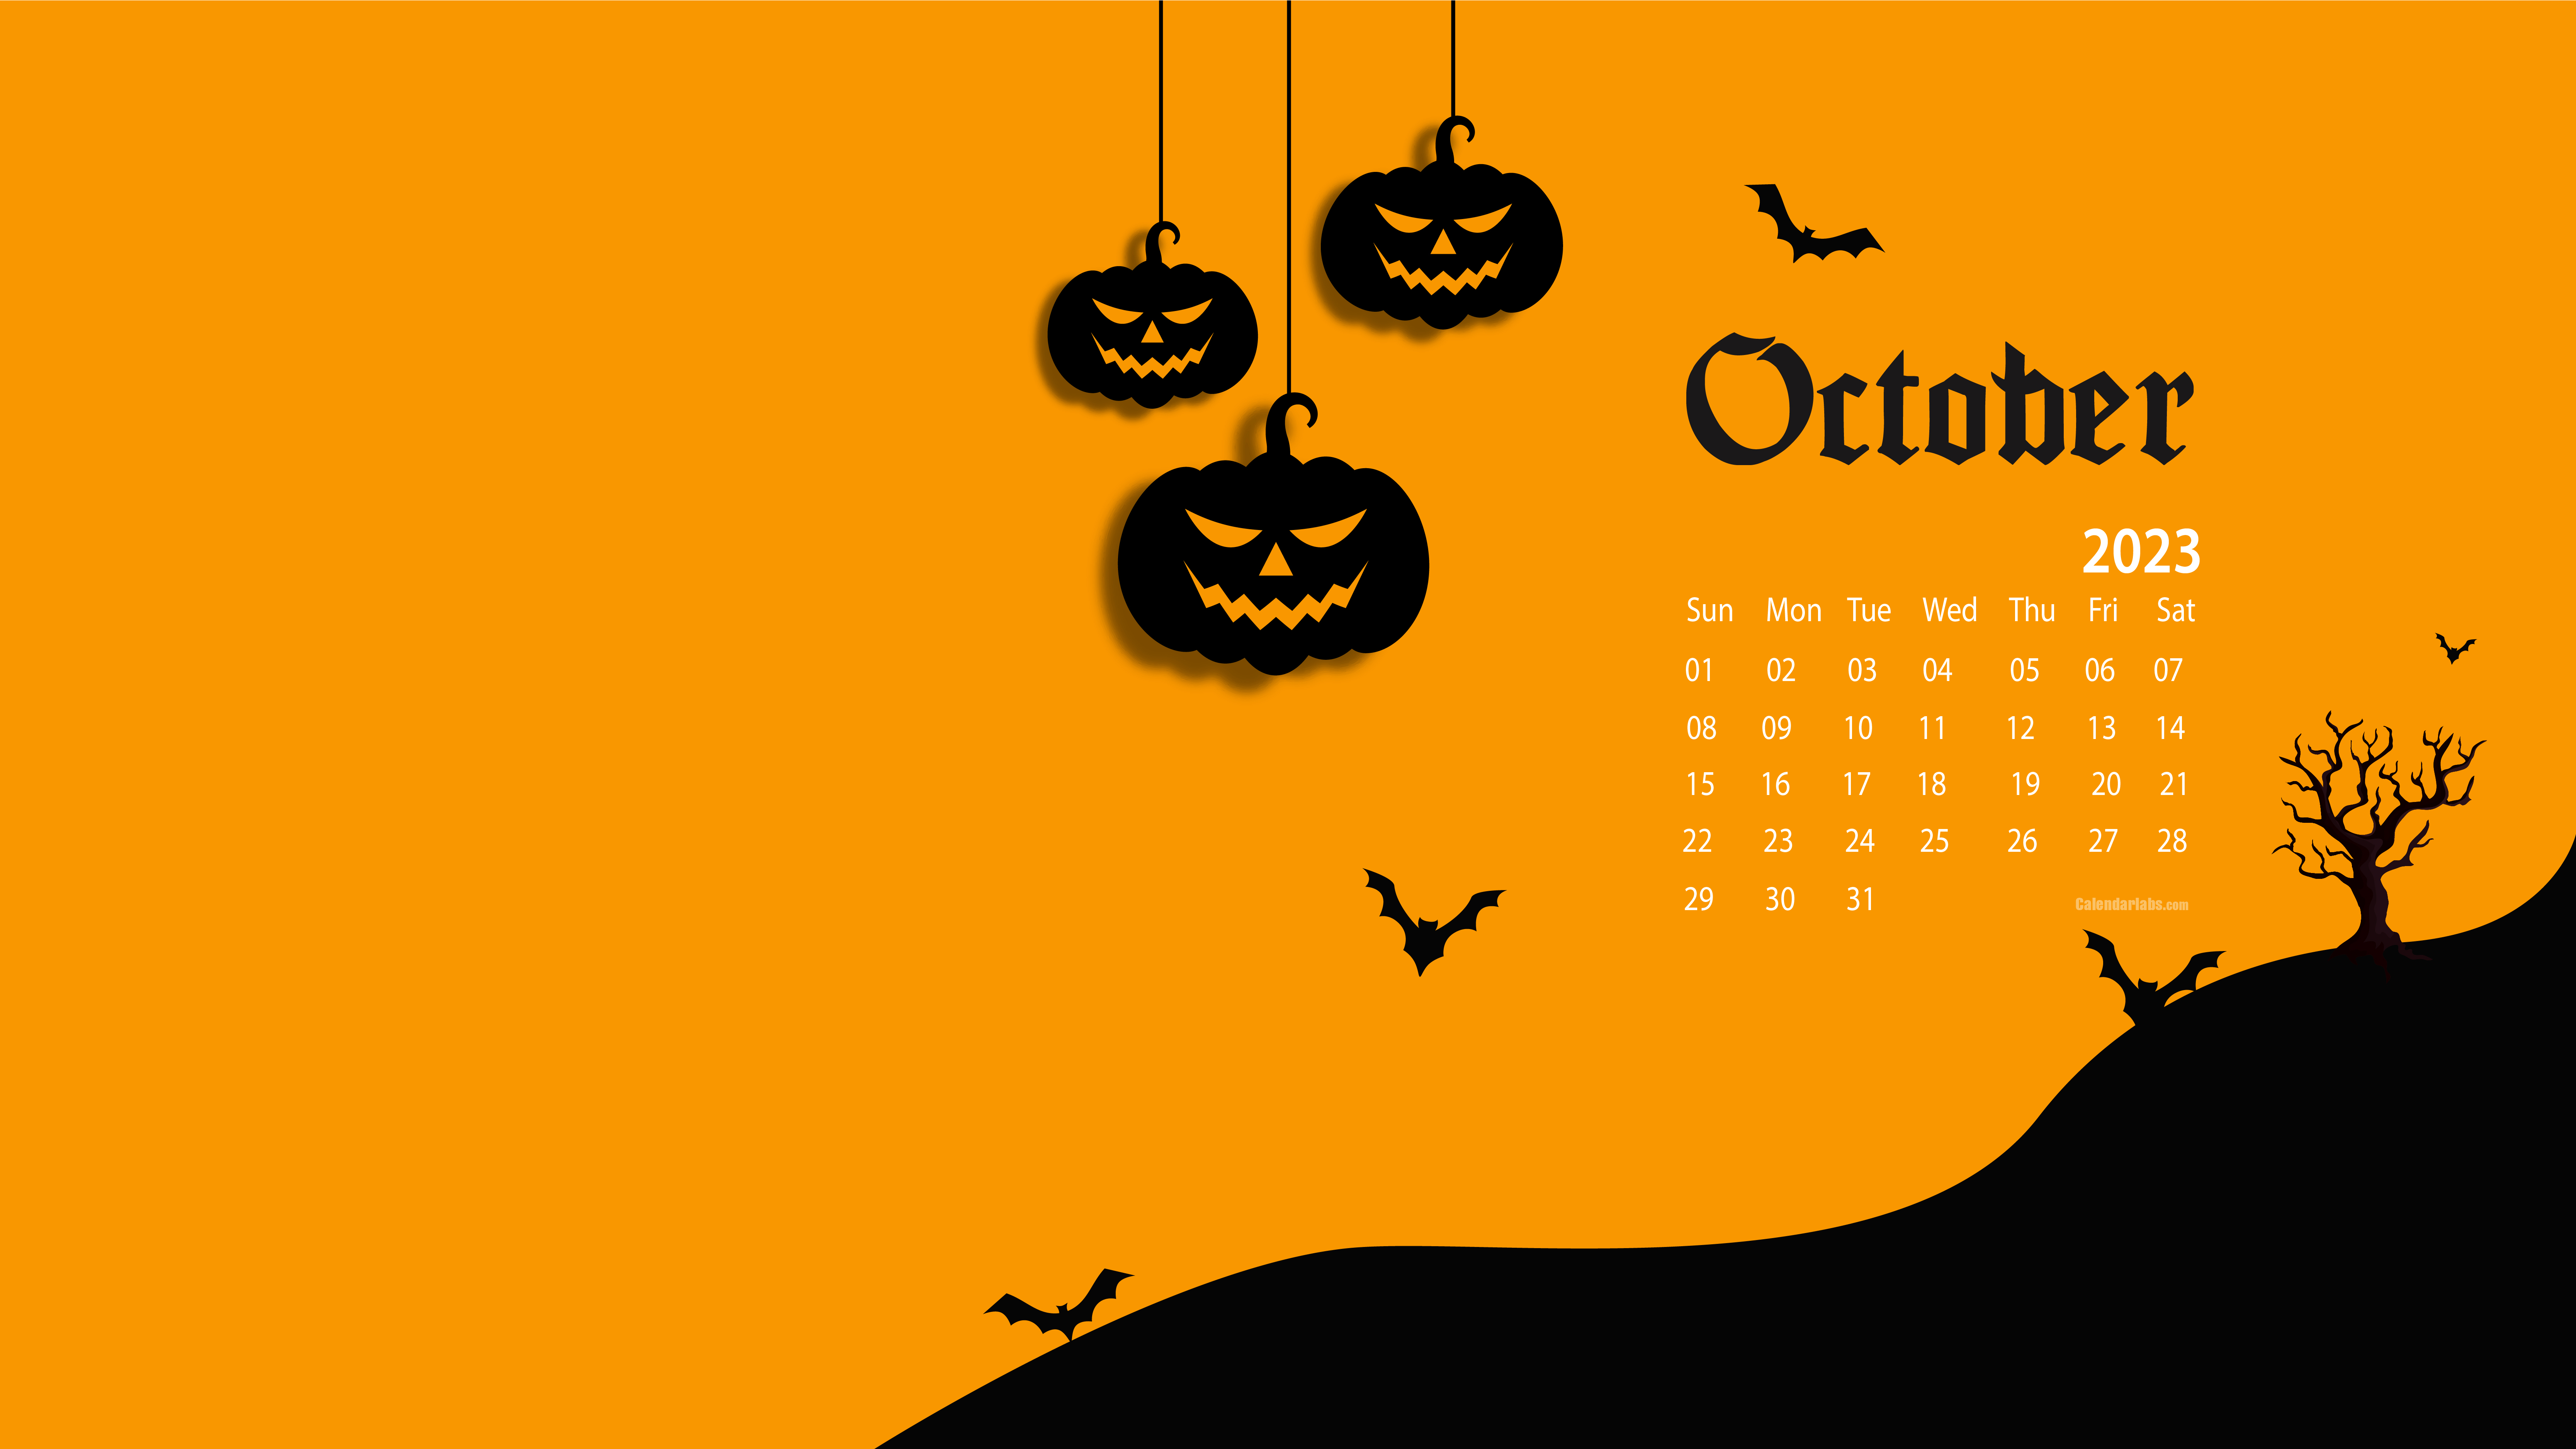 October 2023 Desktop Wallpaper Calendar